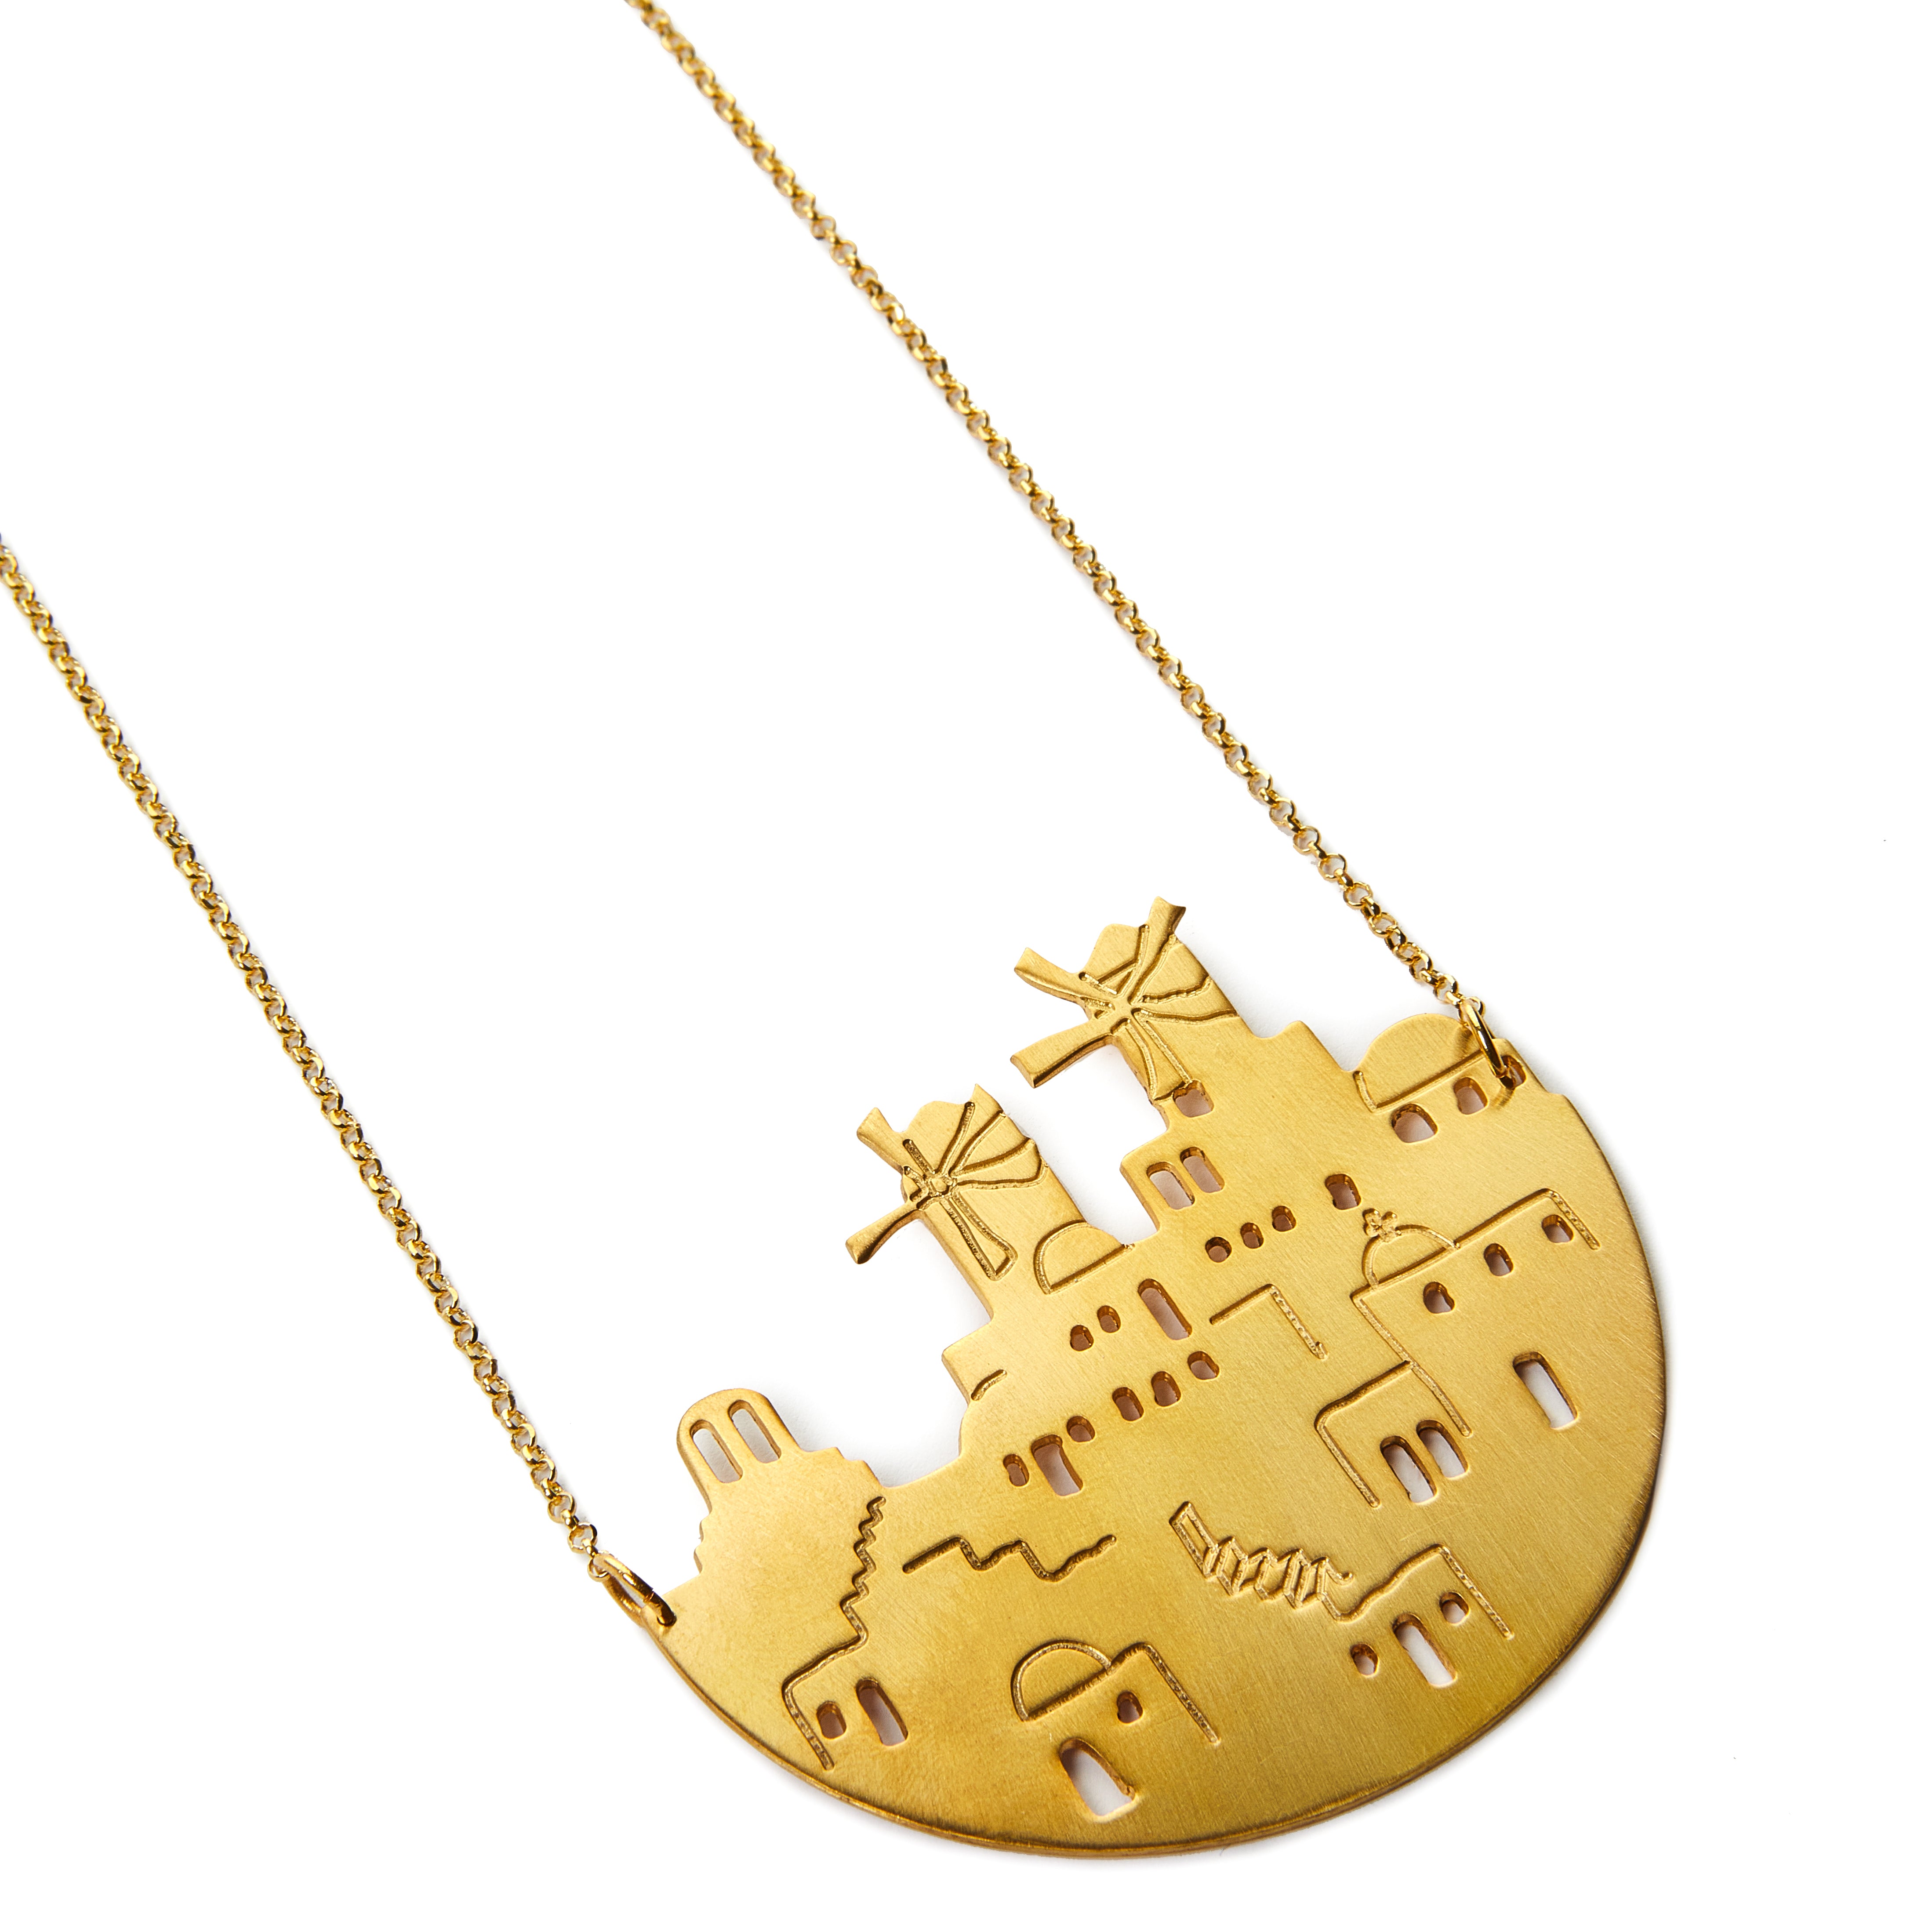 Santorini chain necklace